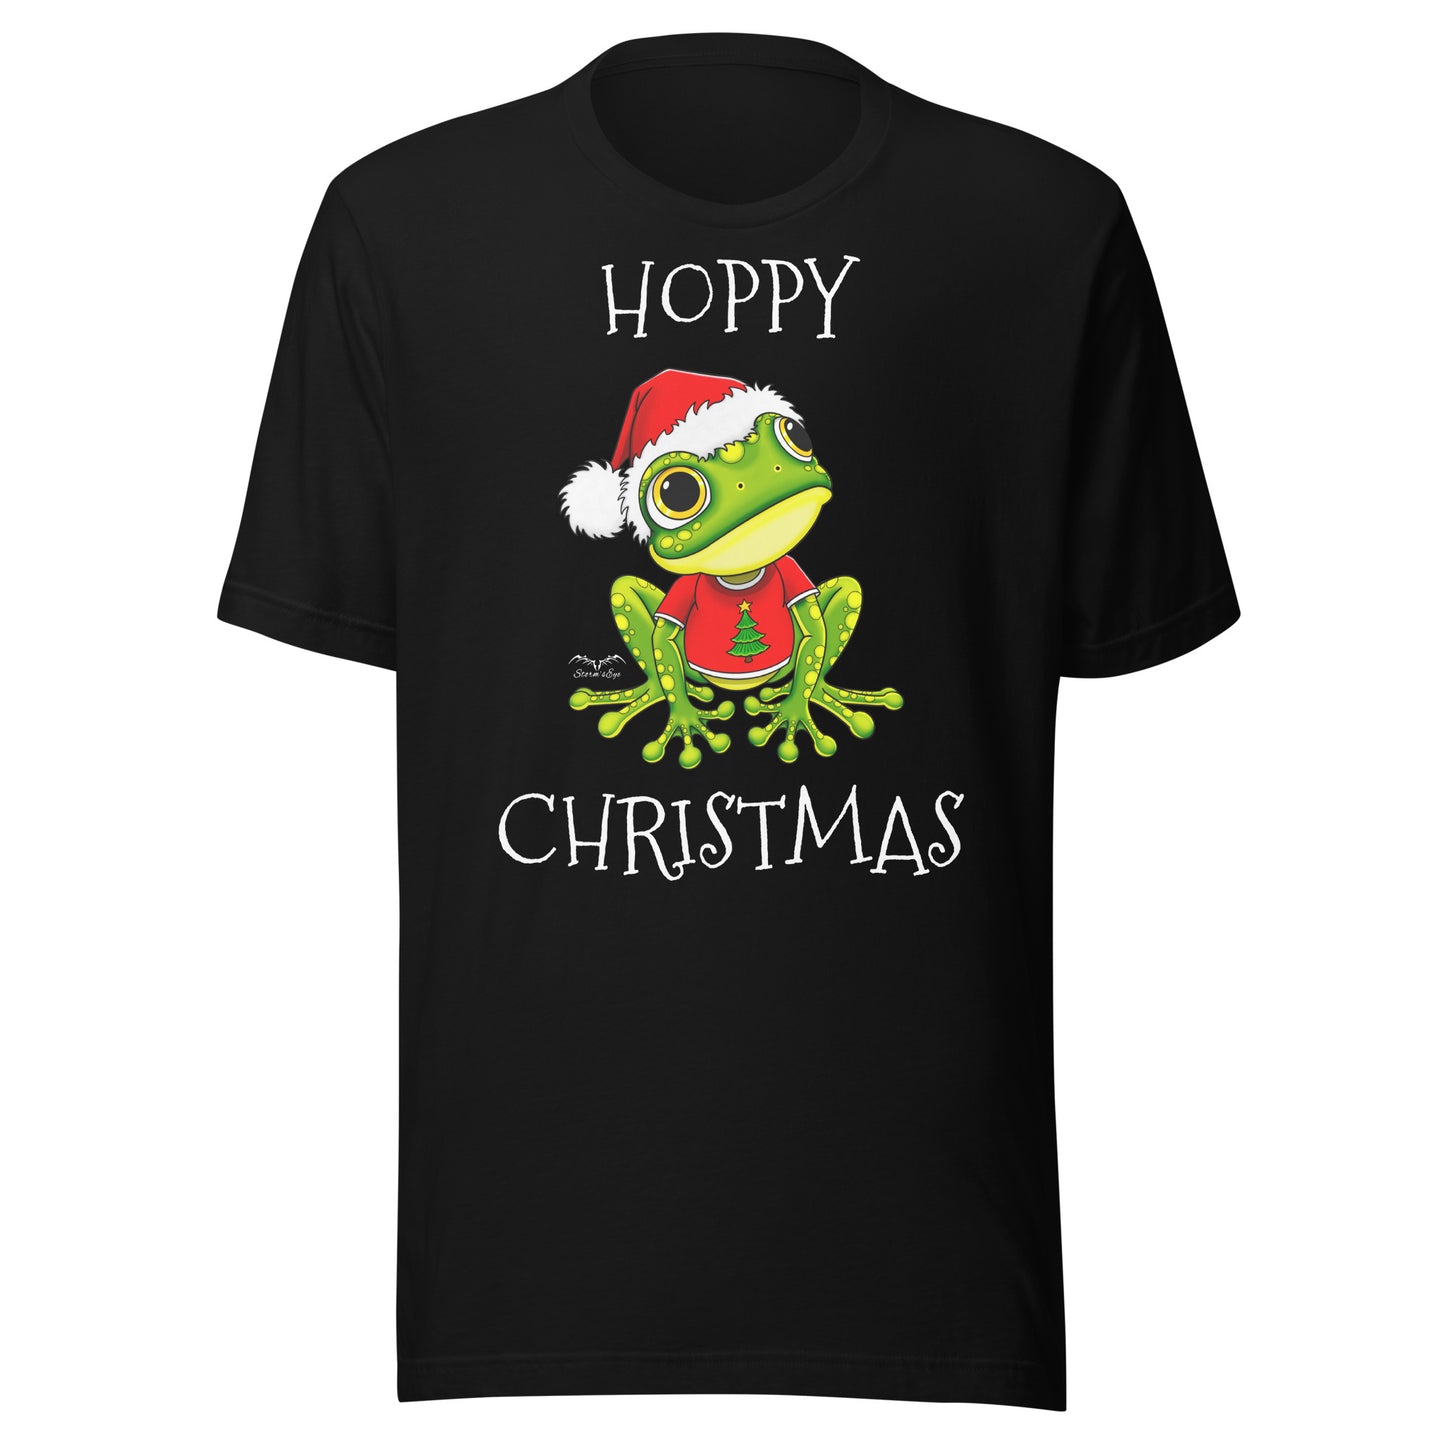 stormseye design hoppy christmas santa frog T shirt, flat view black